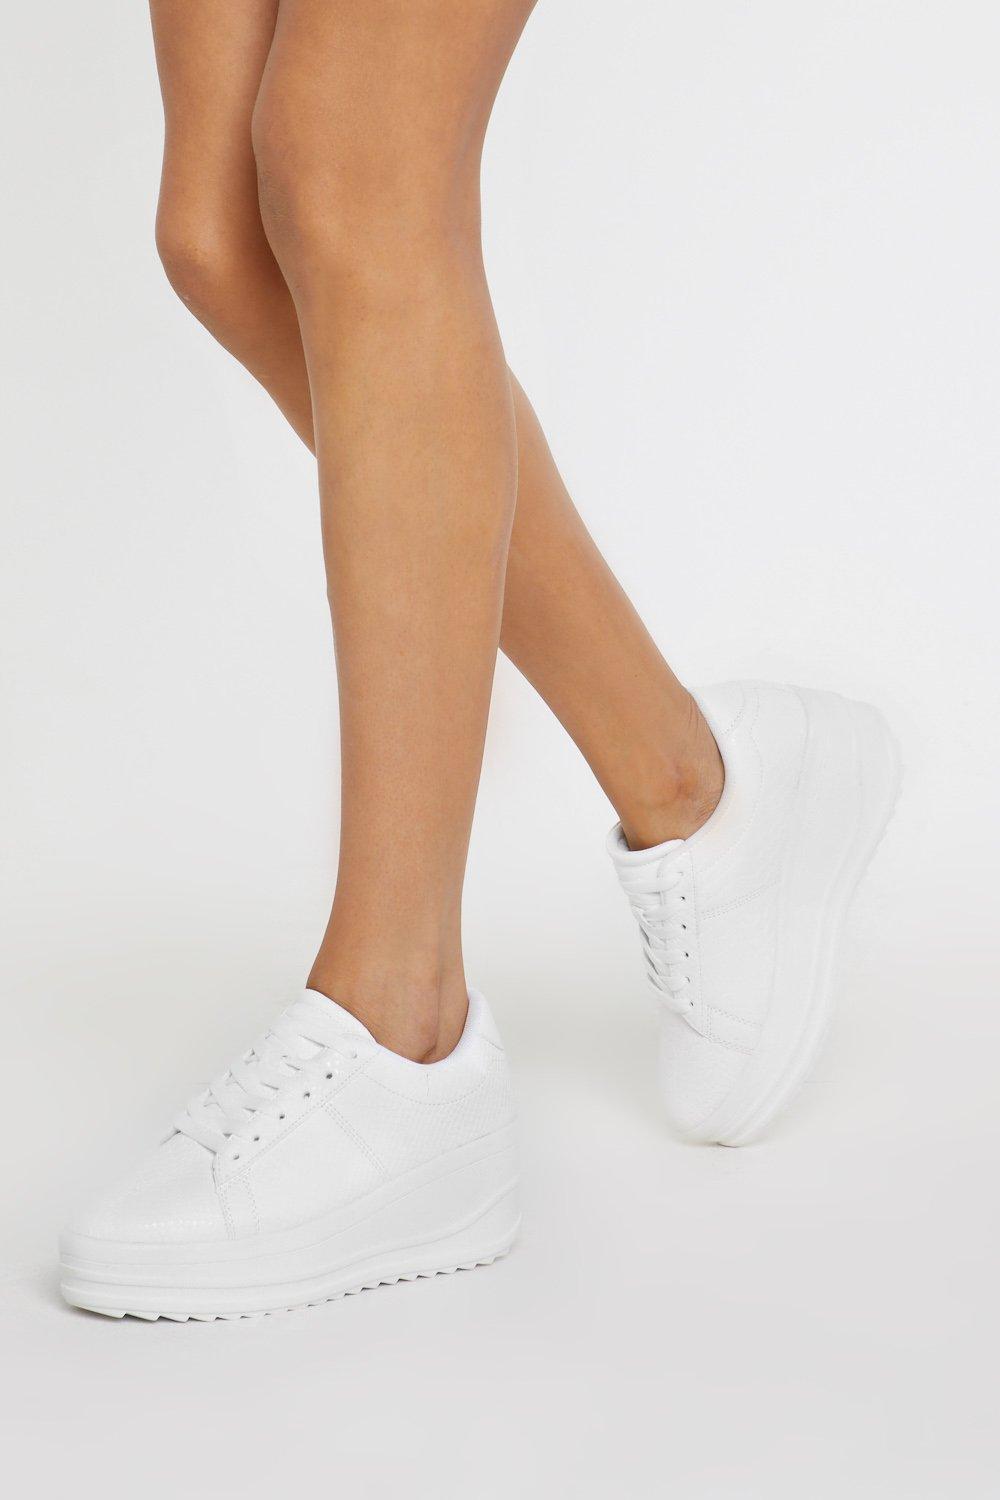 white crocs tennis shoes